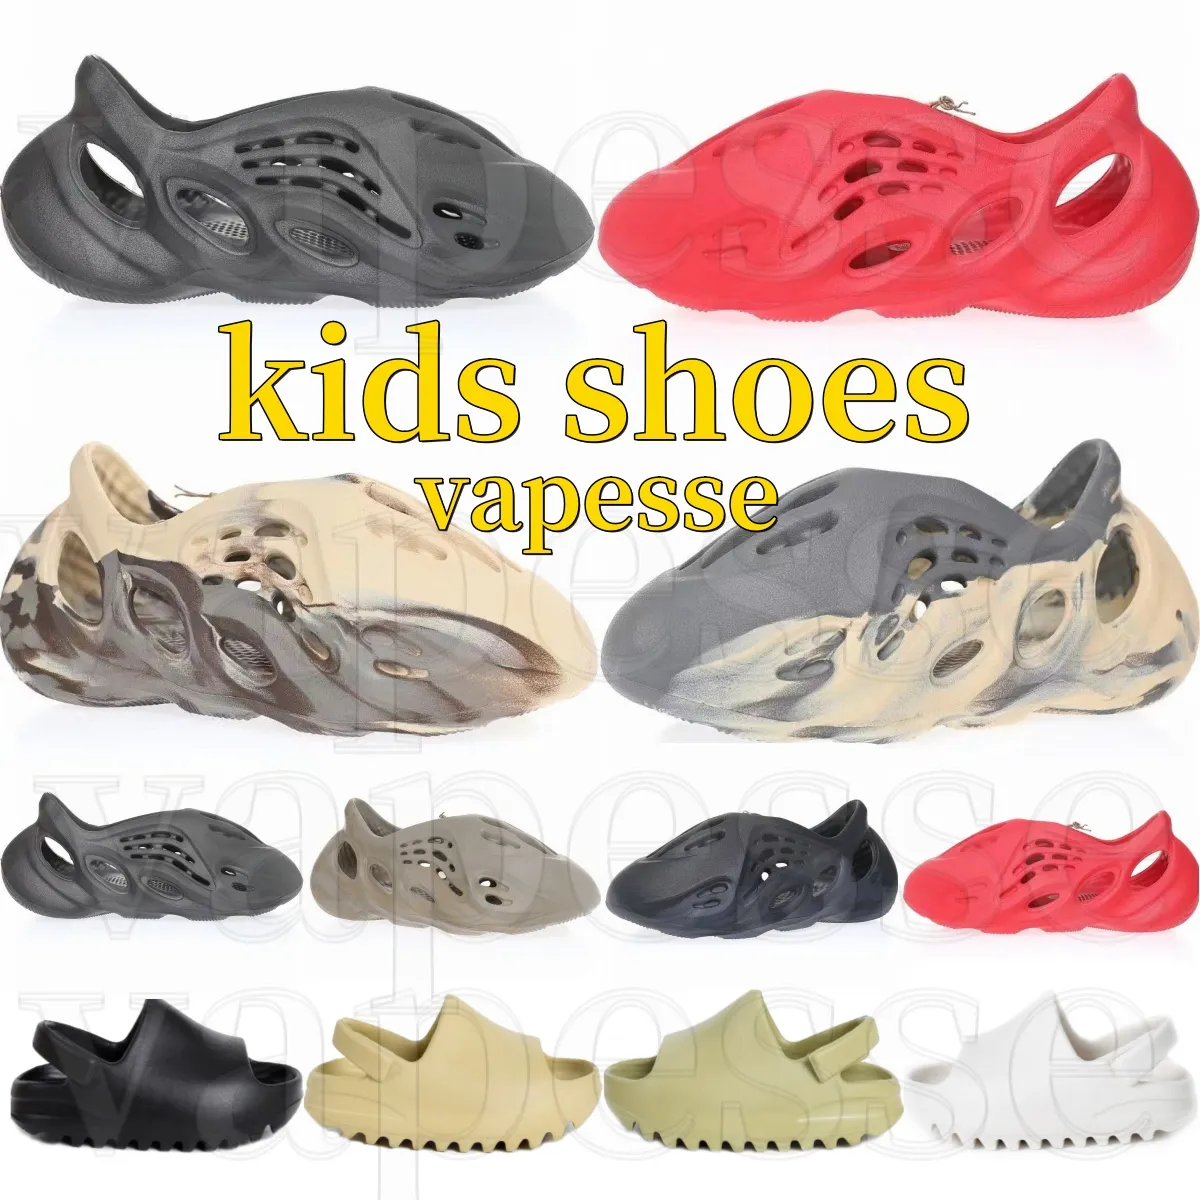 Sapatos infantis de crian￧as, corredor de sapato de sapato de sapato de sapatilhas de t￪nis de designer de t￪nis de t￪nis meninos pretos garotos jovens crian￧as menino menino garotas de menina moda cinza sga16